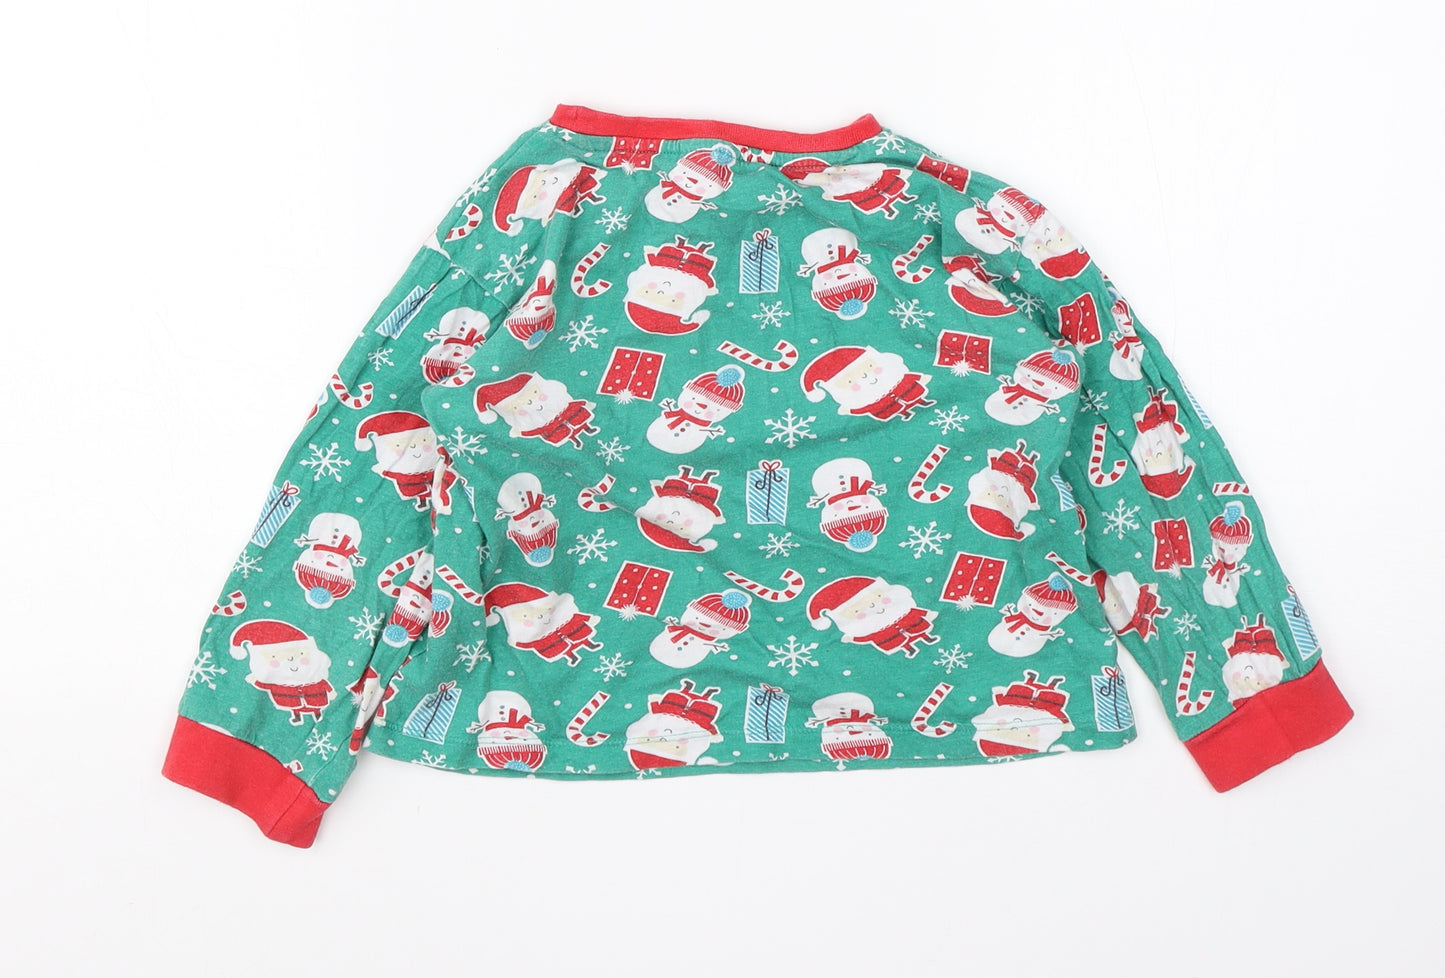 Preworn Boys Green  Cotton  Pyjama Top Size 4-5 Years   - christmas